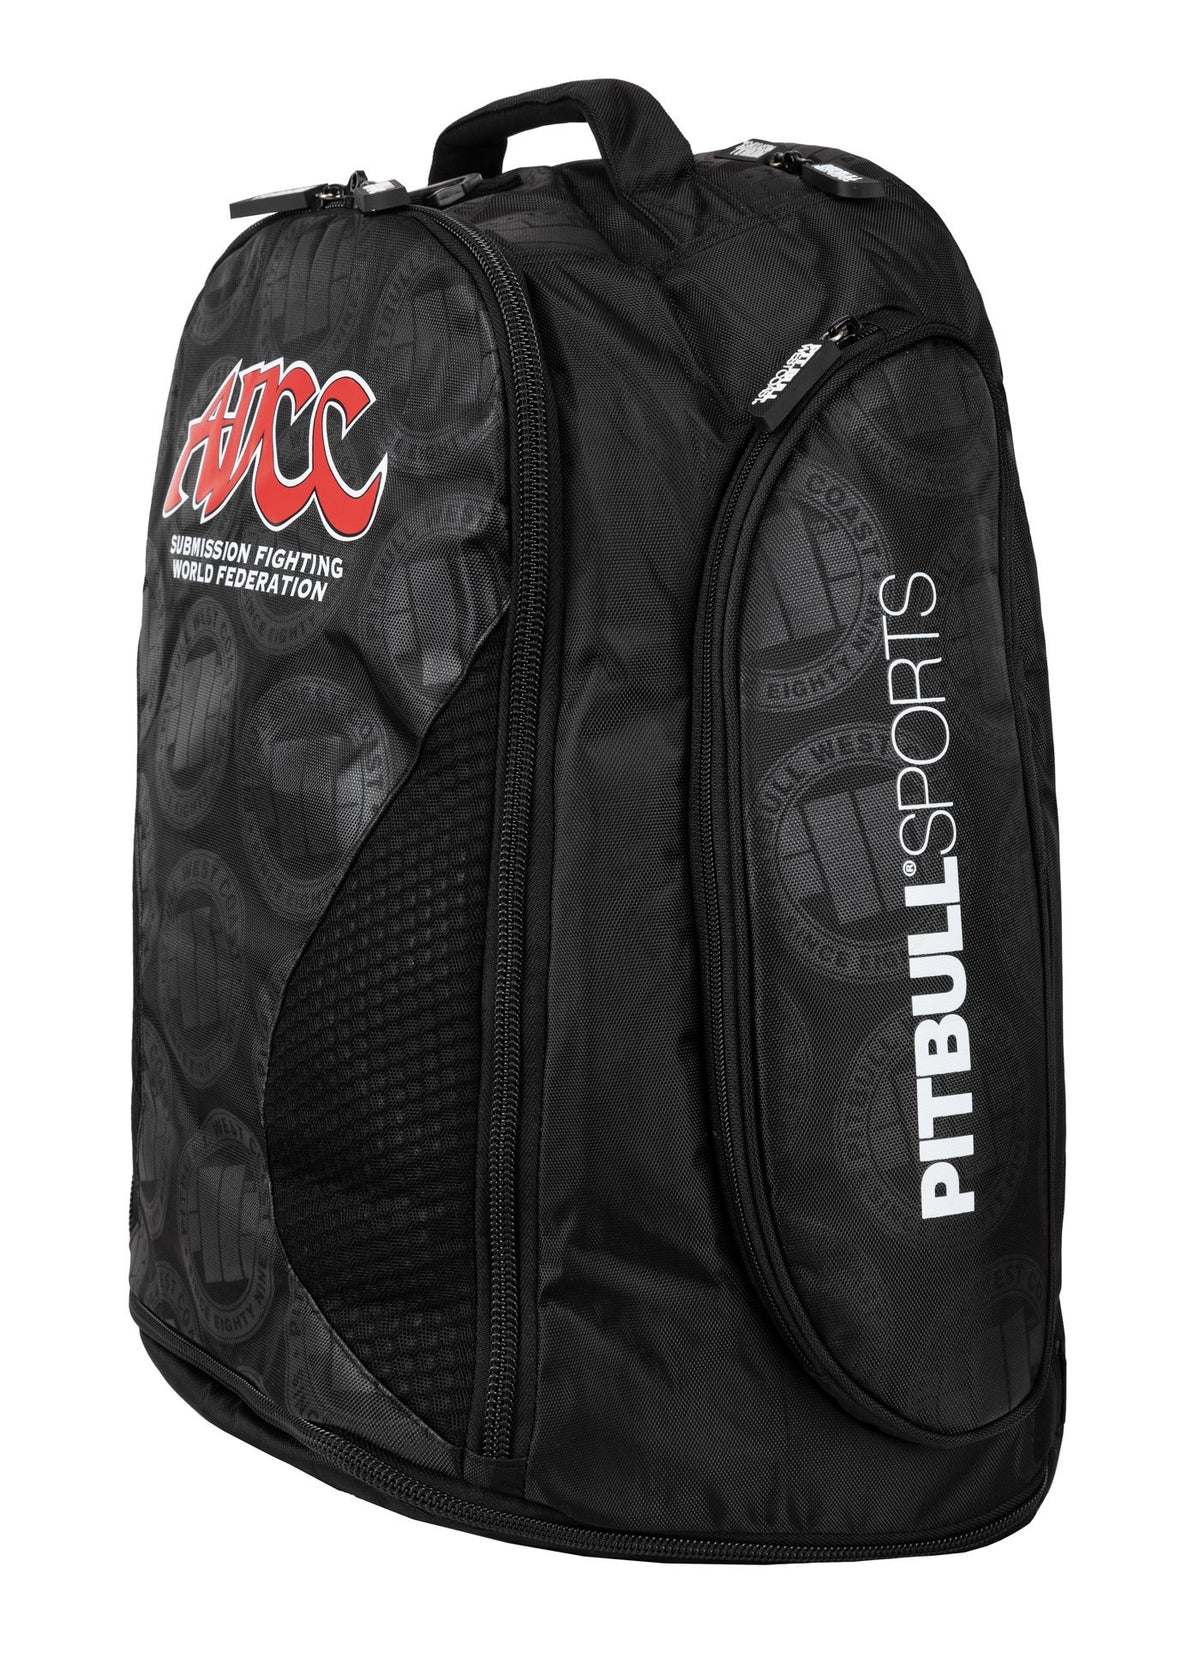 ADCC Black Big Training Backpack.